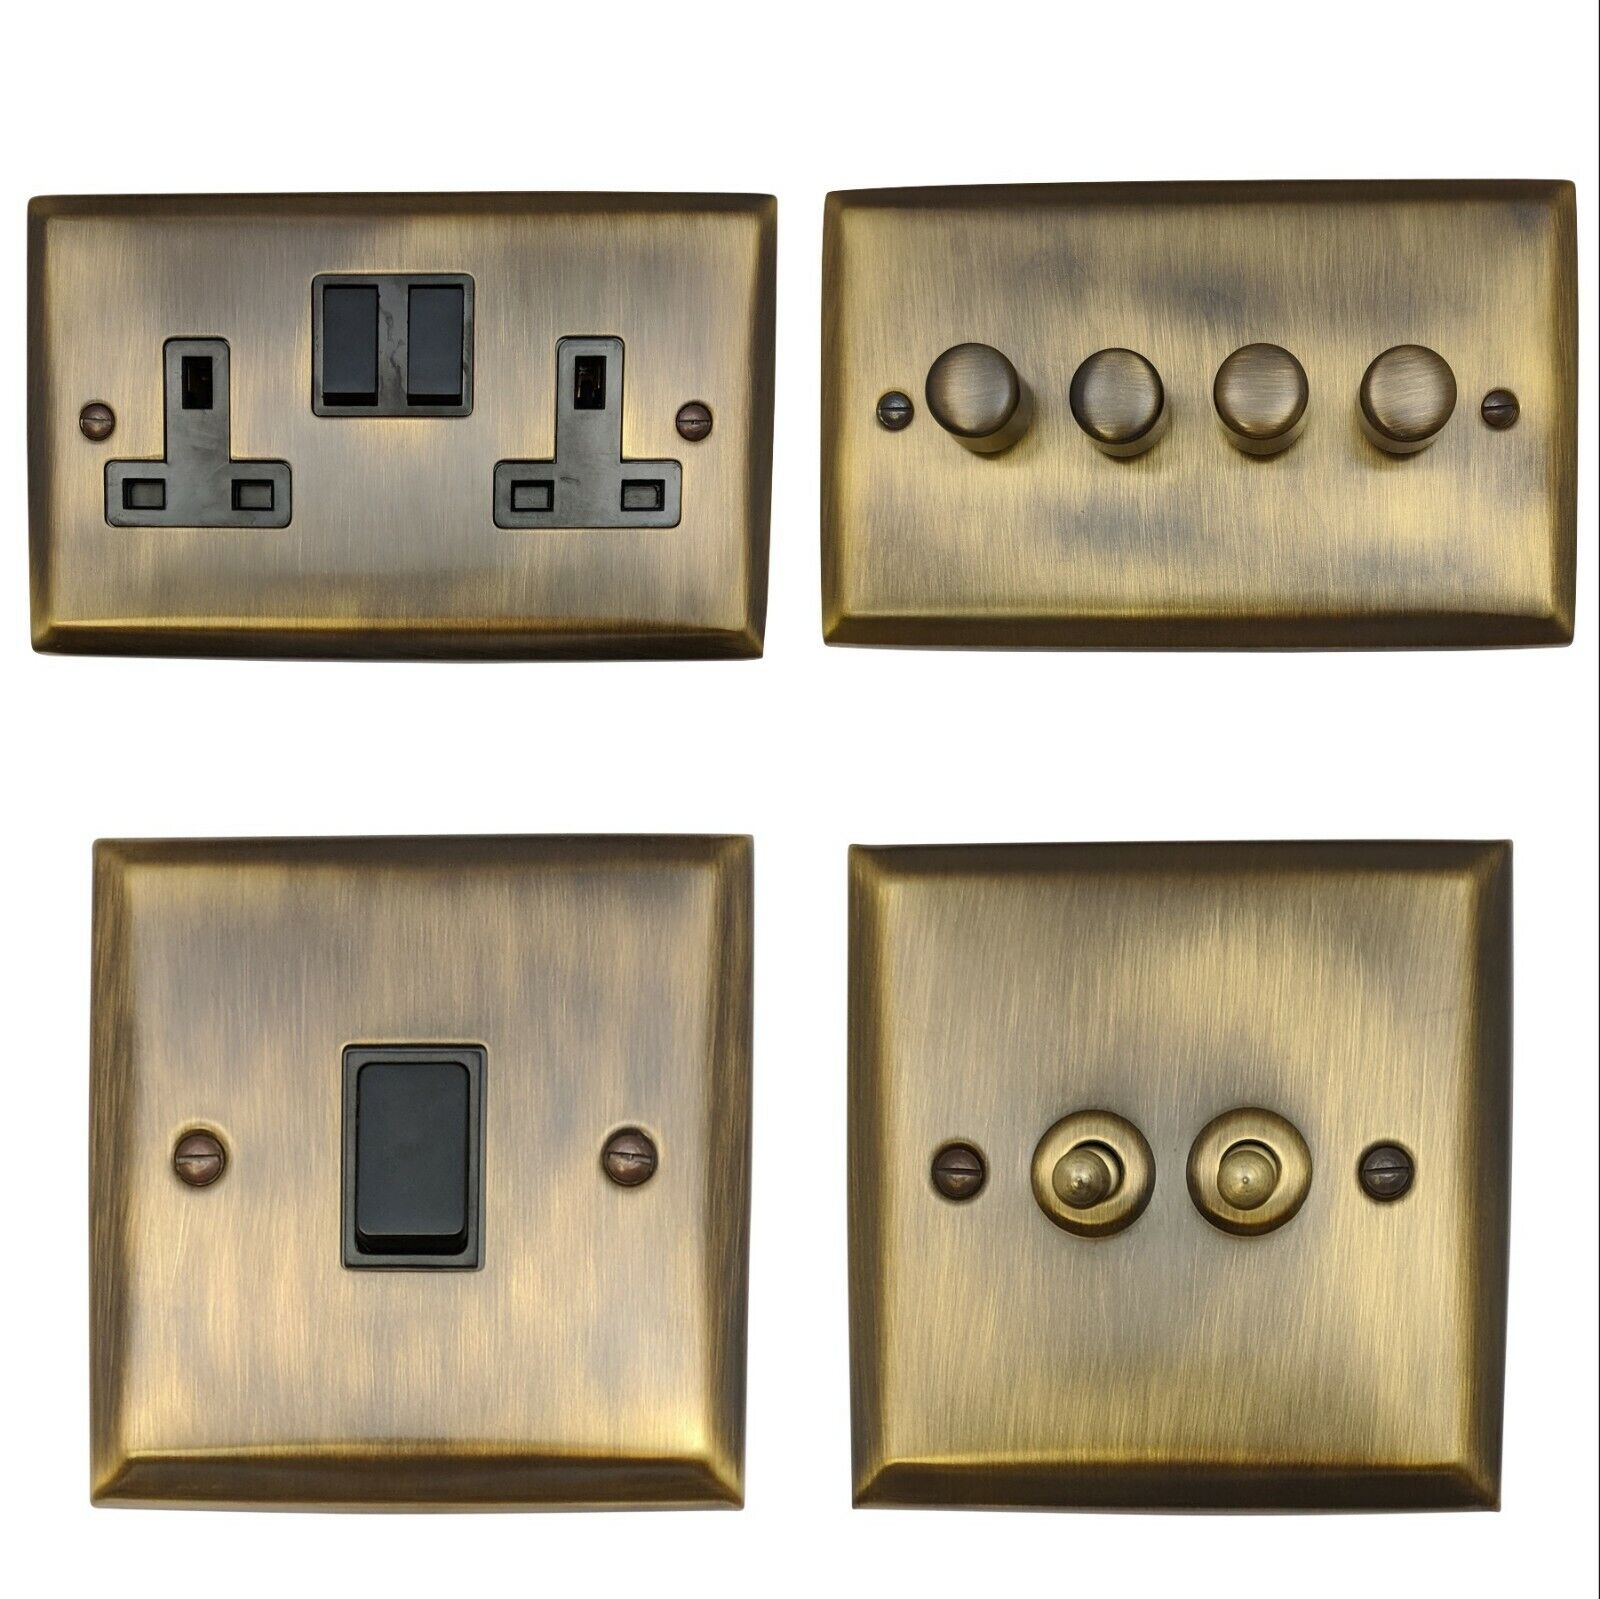 Spectrum Antique Bronze SABB Light Switches, Plug Sockets, Dimmers, Cooker, Fuse Świetna jakość, wysoka jakość